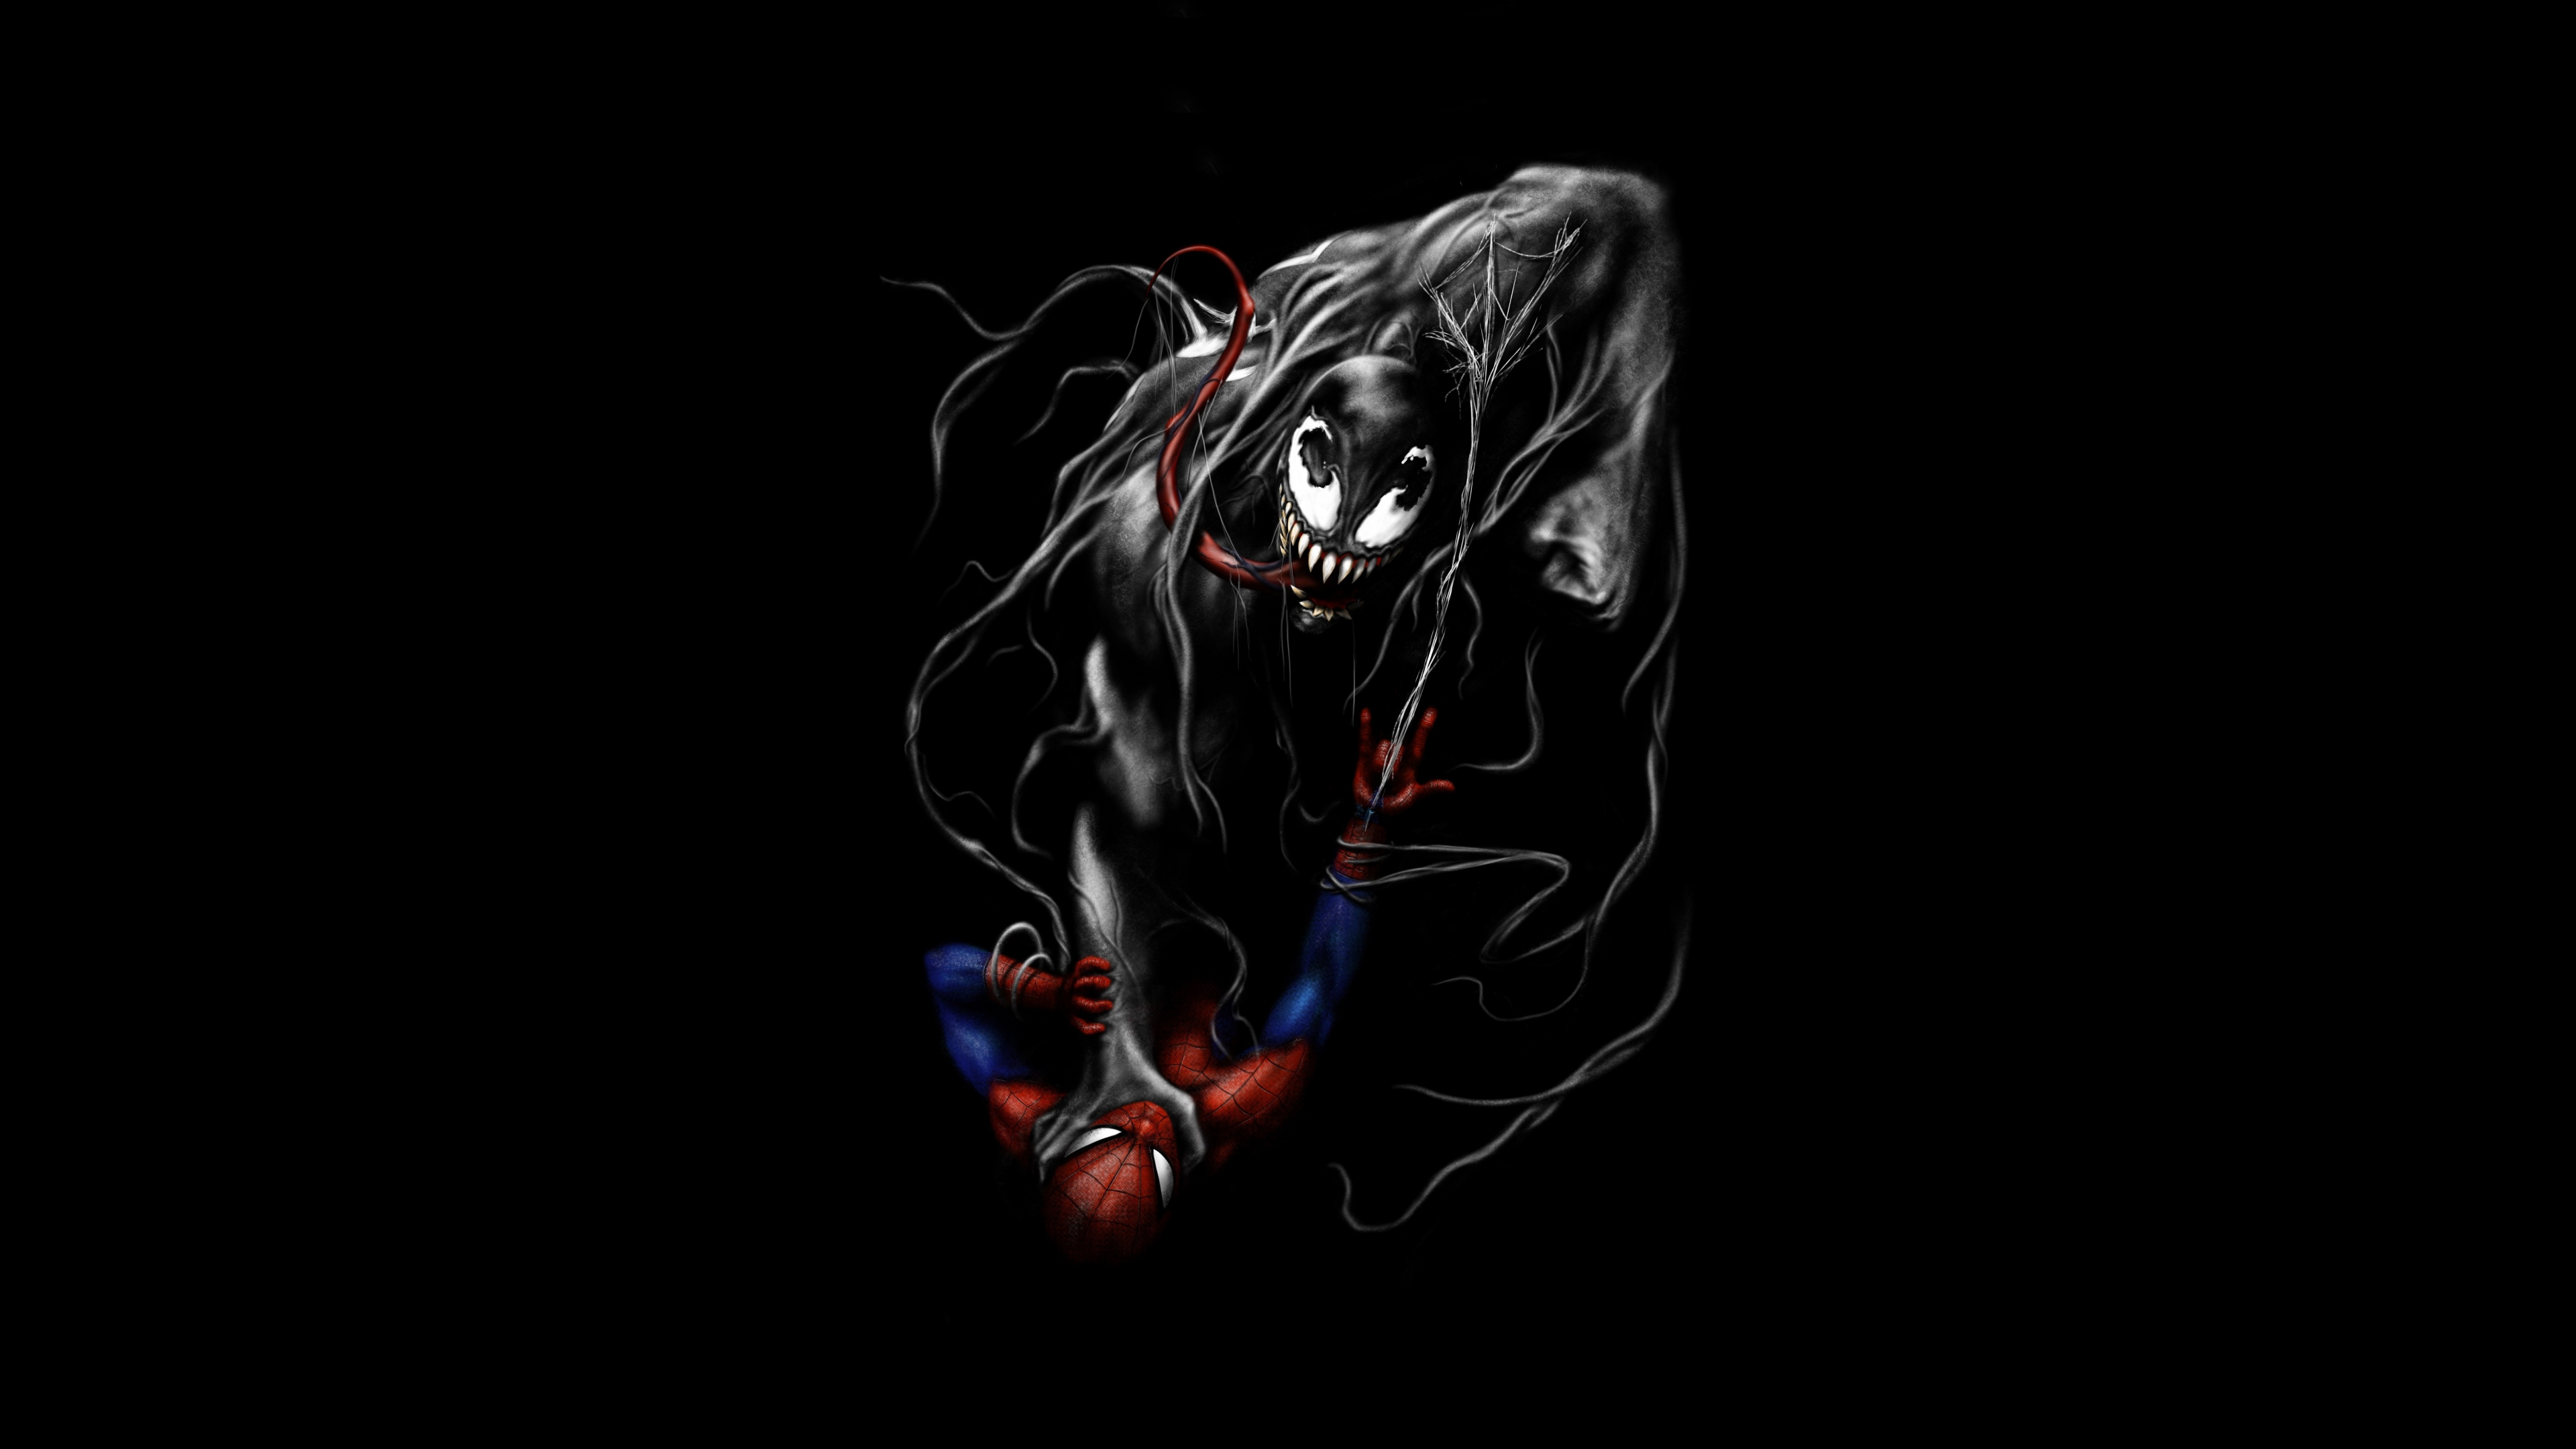 Download 3840x2160 Venom And Spider Man, Fight, Black And Dark, Minimal, Art 4k Wallpaper, Uhd Wallpaper, 16:9 Widescreen Wallpaper, 3840x2160 HD Image, Background, 10437